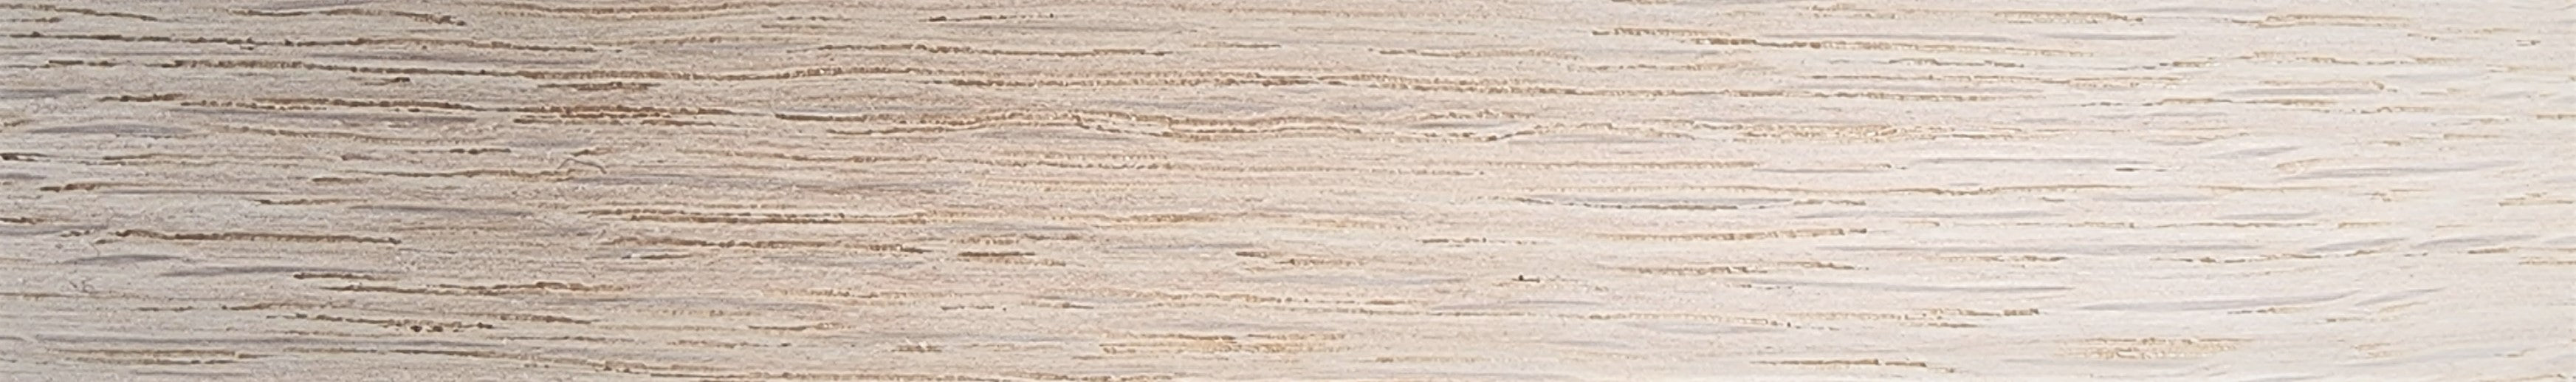 European Oak Unglued Thick Wood Edging / Lipping 34mm x 1mm x 50 Metres